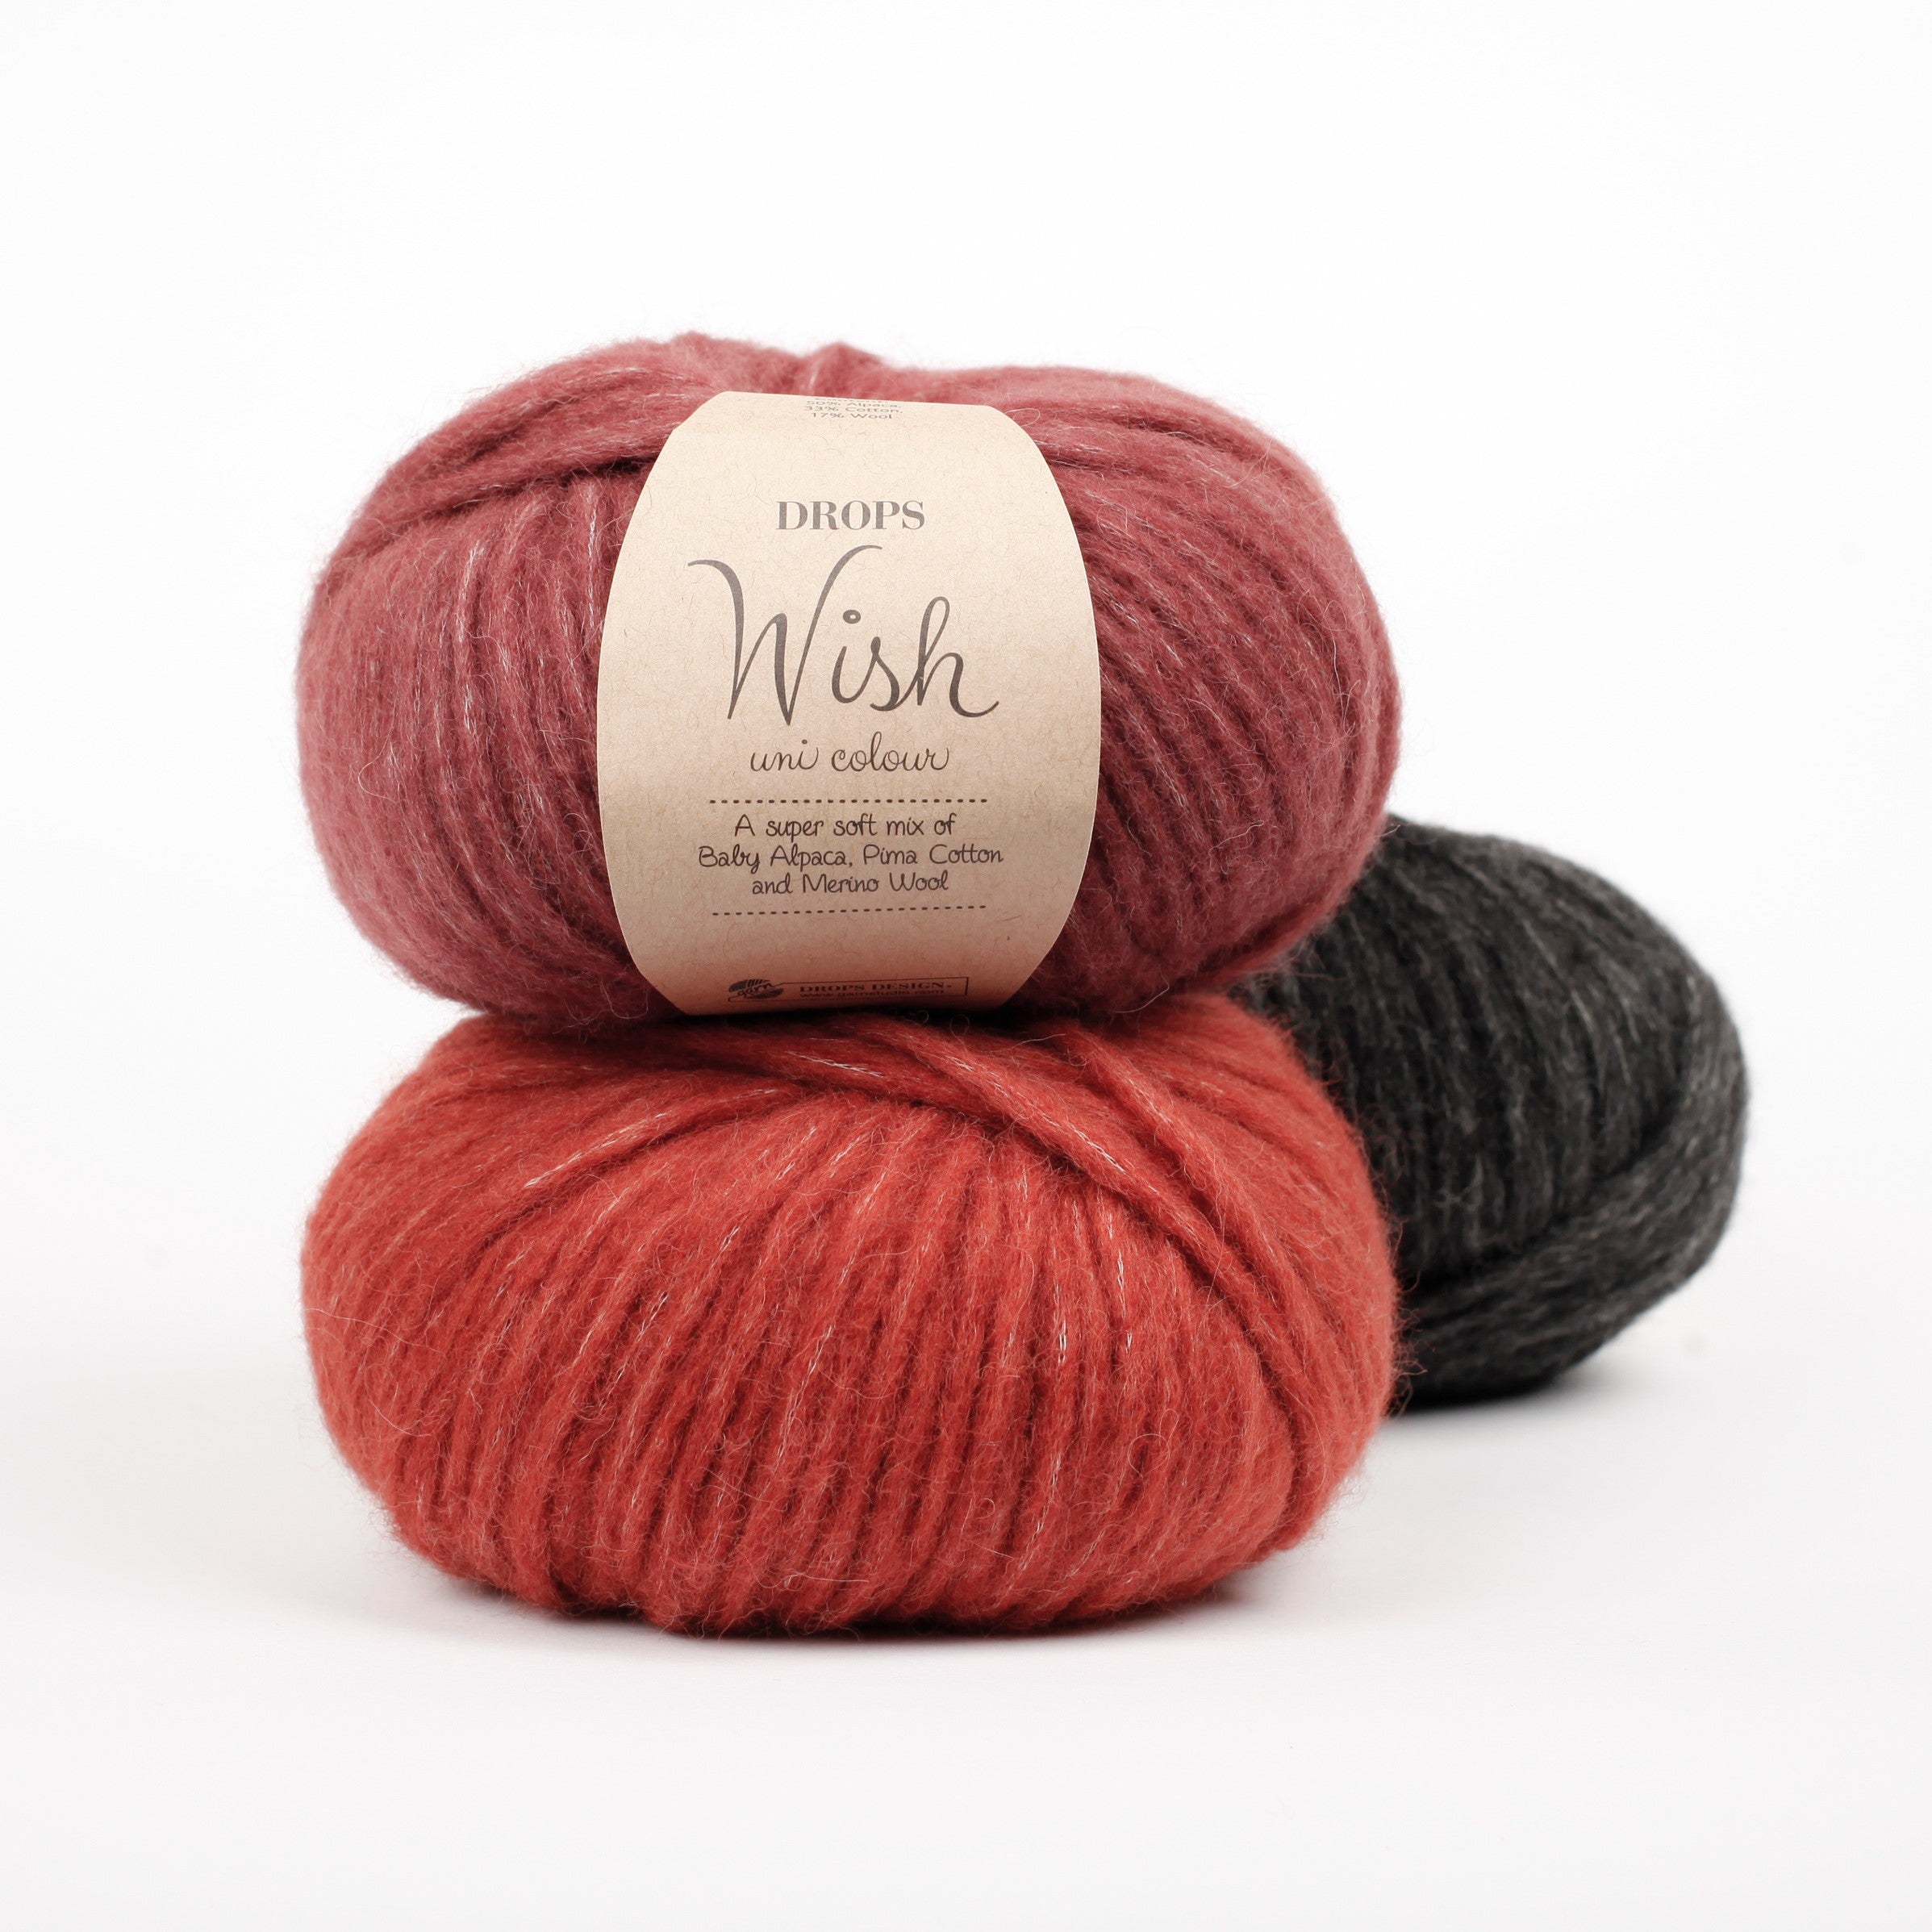 Wish Drops  Shop Yarn Online Today - Beehive Wool Shop